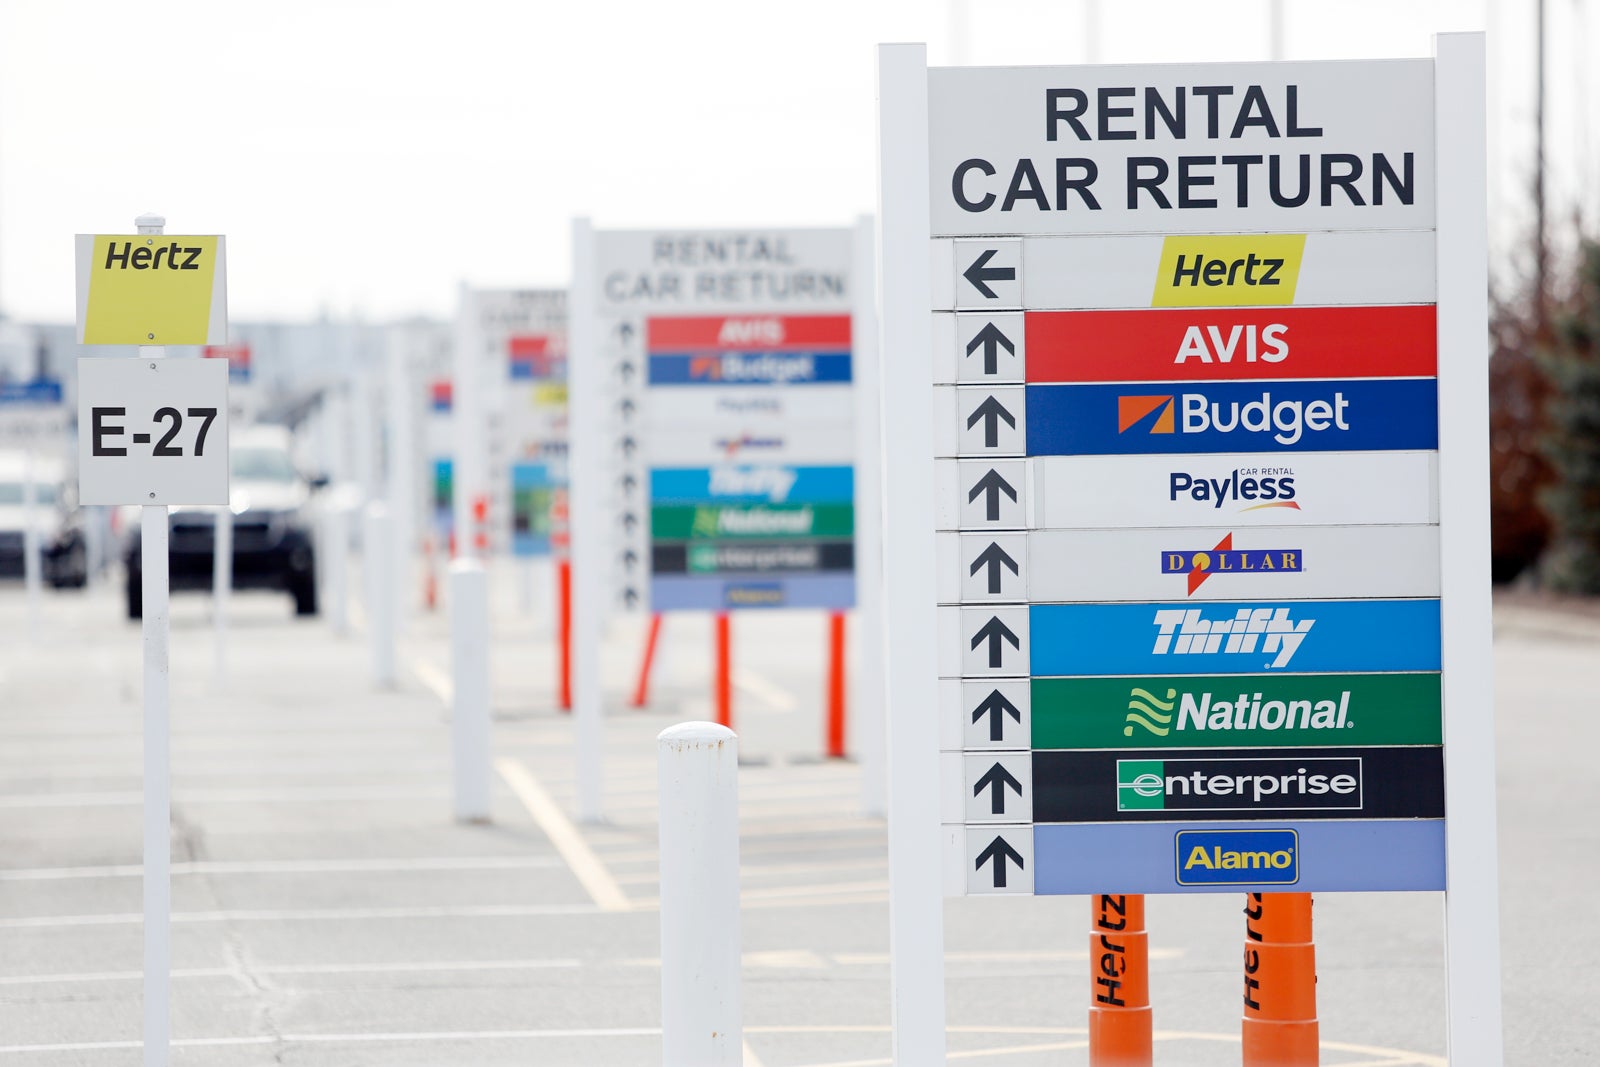 National Car Rental Extends Loyalty Benefits Through 2021